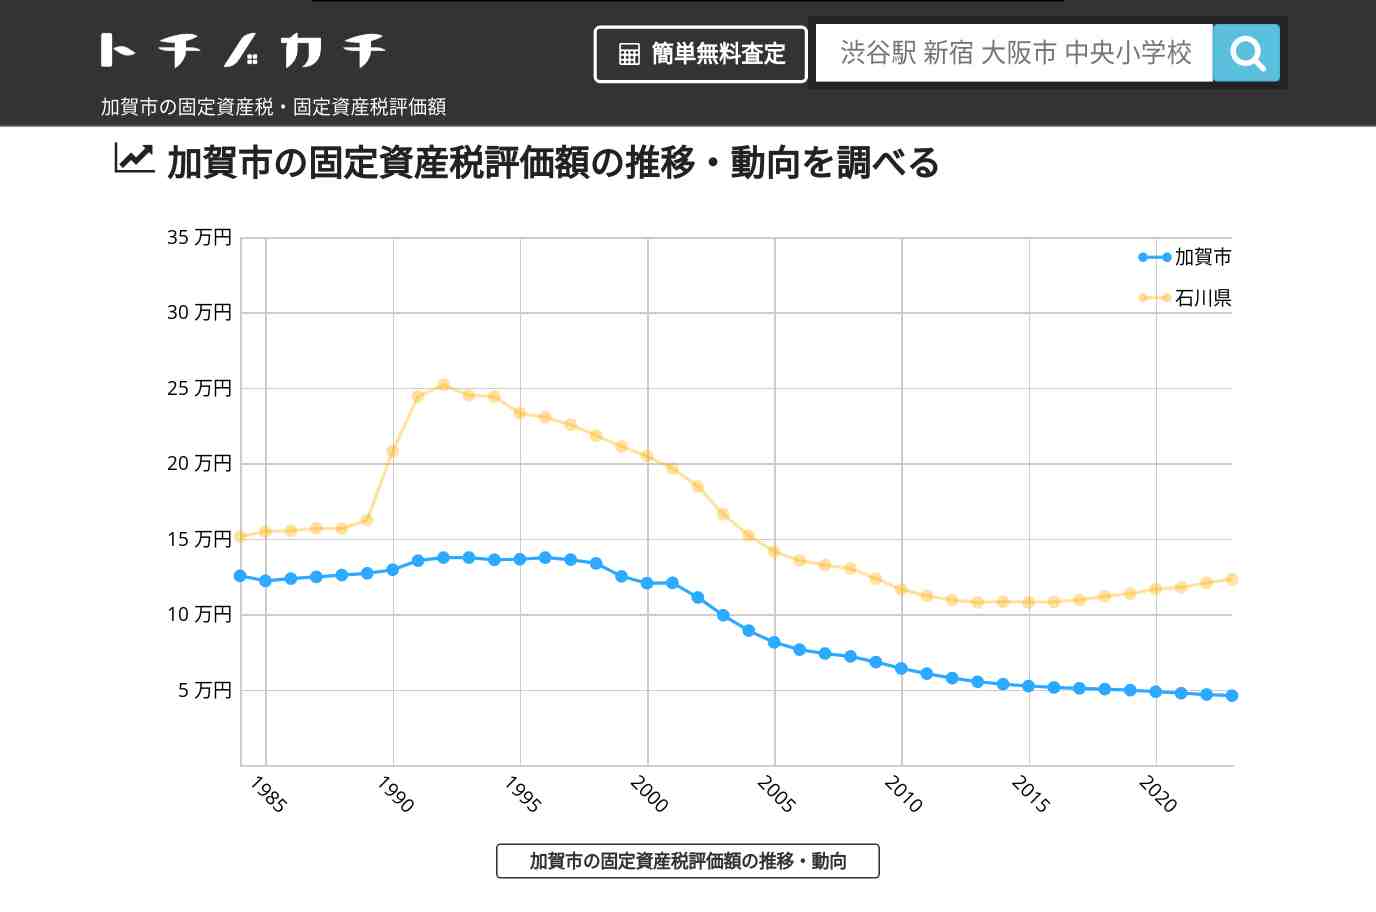 菅谷小学校(石川県 加賀市)周辺の固定資産税・固定資産税評価額 | トチノカチ